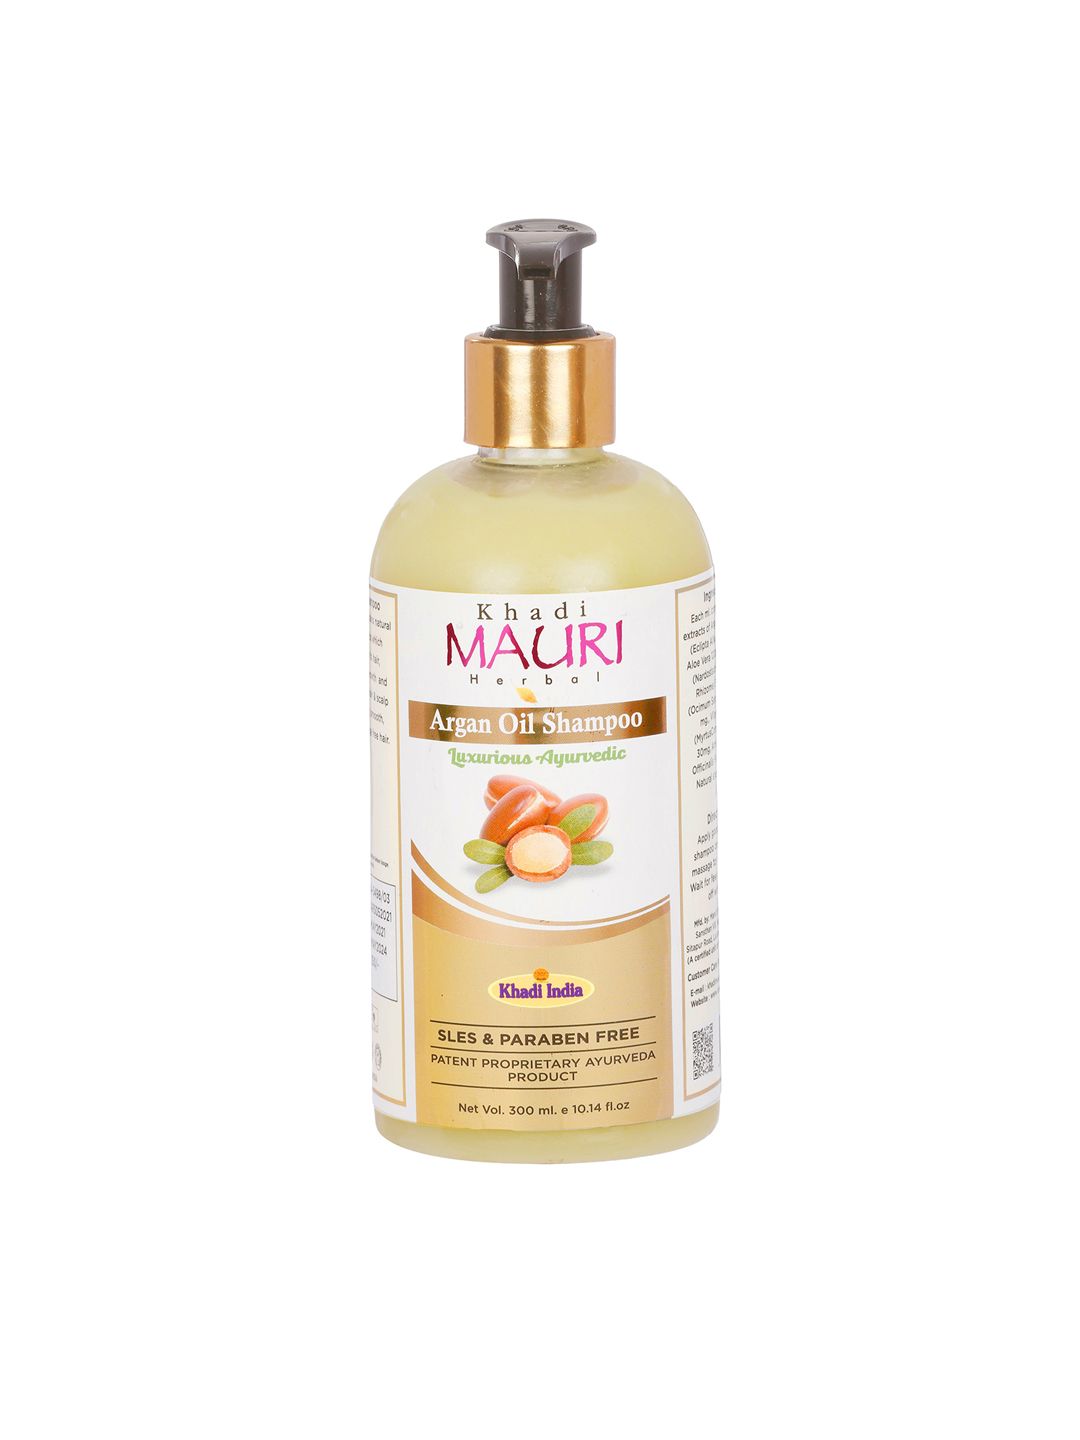 Khadi Mauri Herbal Argan Oil Shampoo - 300 ml Price in India